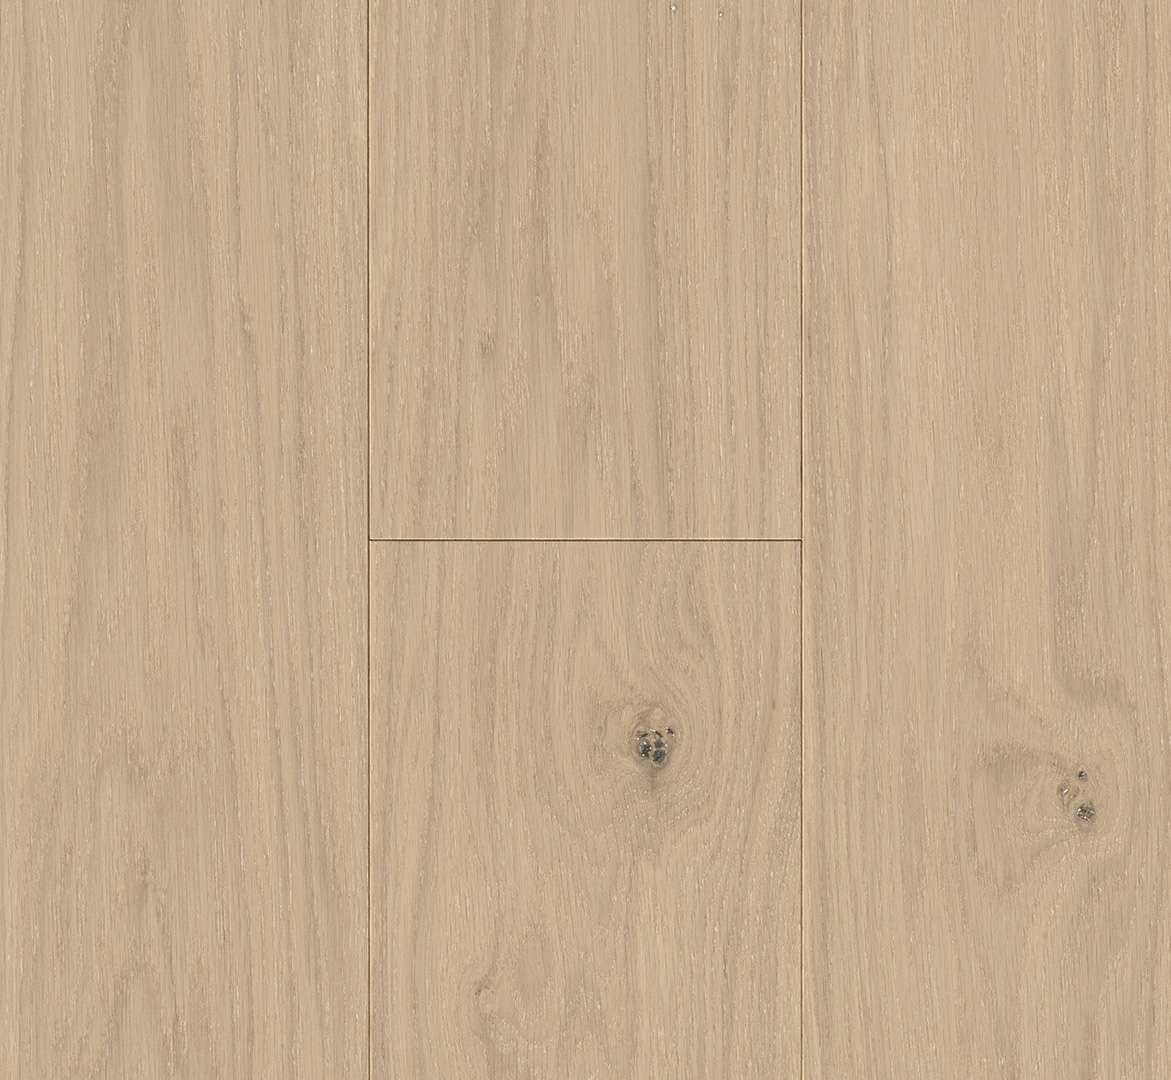 PARADOR Classic 3060 (Dub - Living - lak) 1518128 - dřevěná třívrstvá podlaha